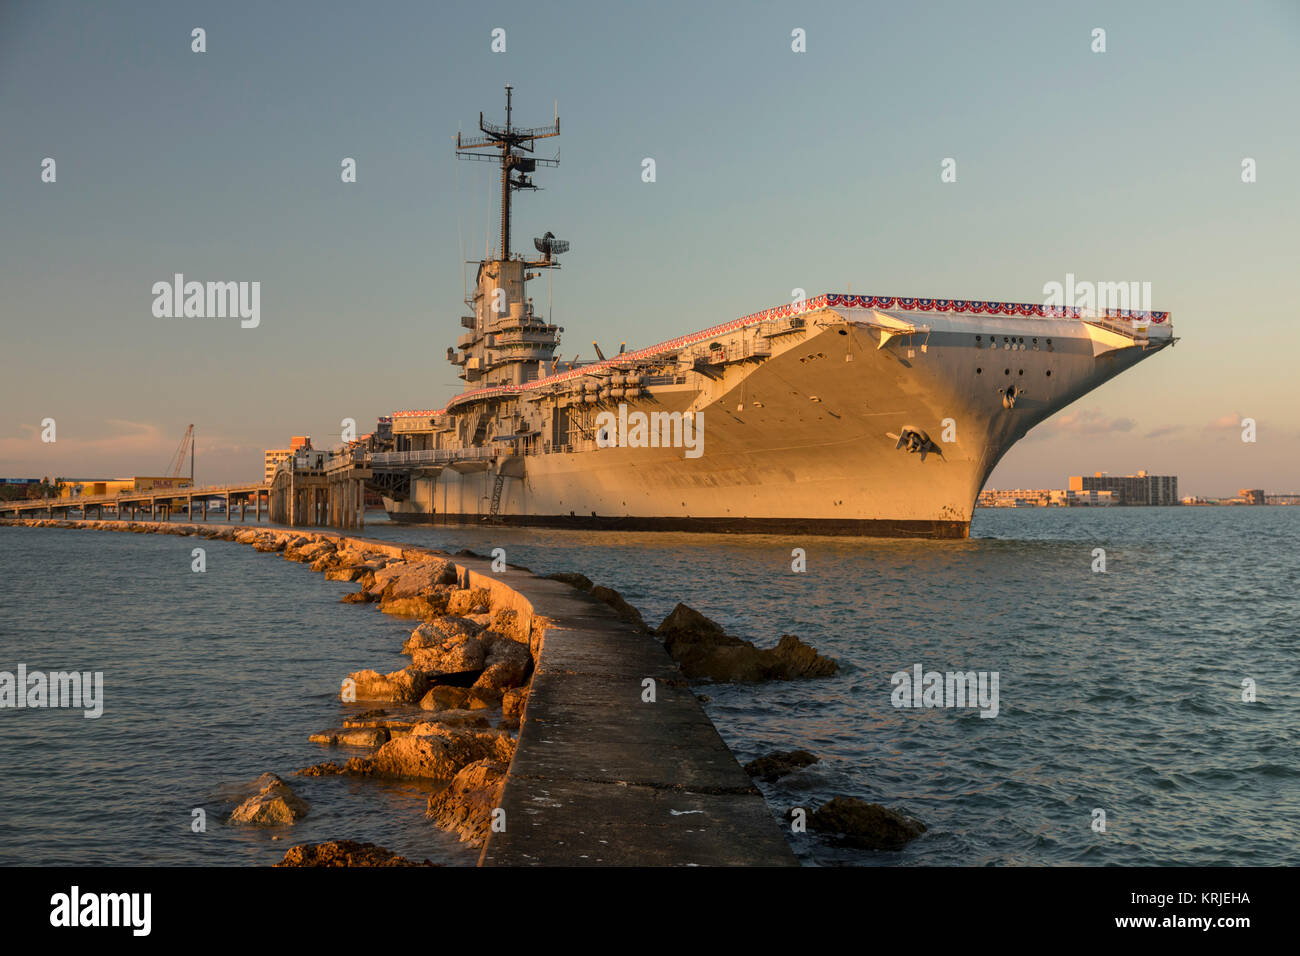 Corpus Christi, Texas - The USS Lexington, a World War II aircraft carrier, which is now a naval museum. Stock Photo